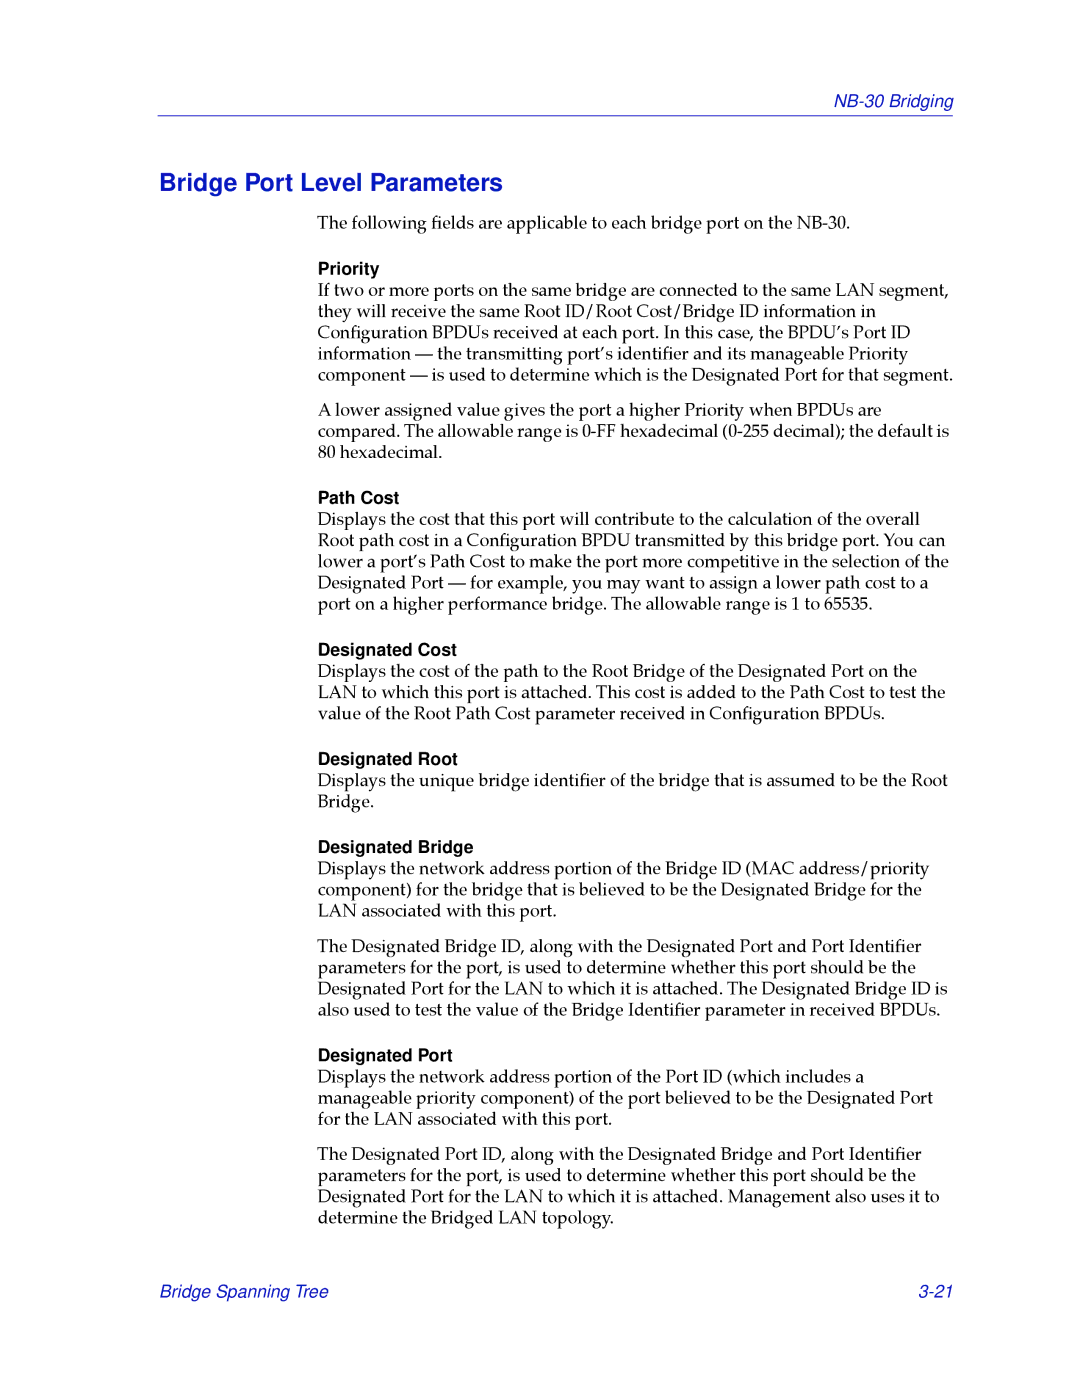 Cabletron Systems NB30 manual Bridge Port Level Parameters 